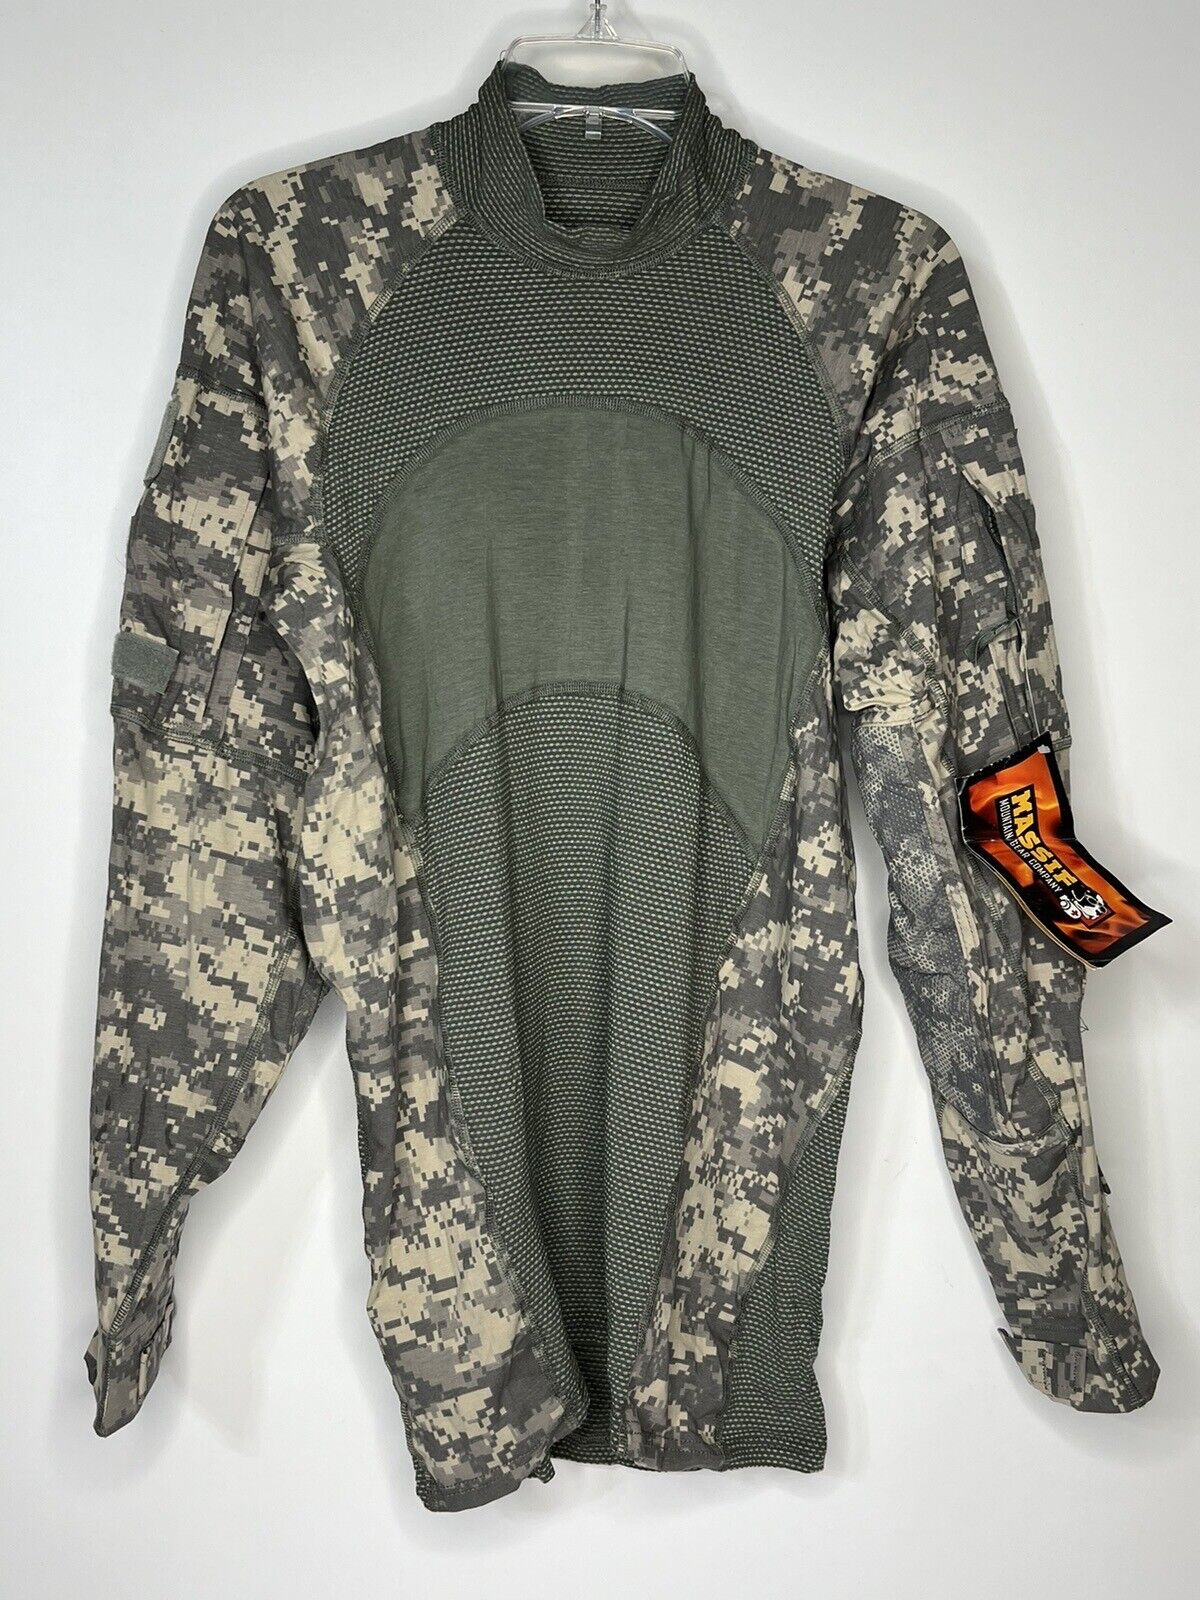 Massif Mountain Gear Army Combat Long Sleeve Shirt Medium Digital Camouflage